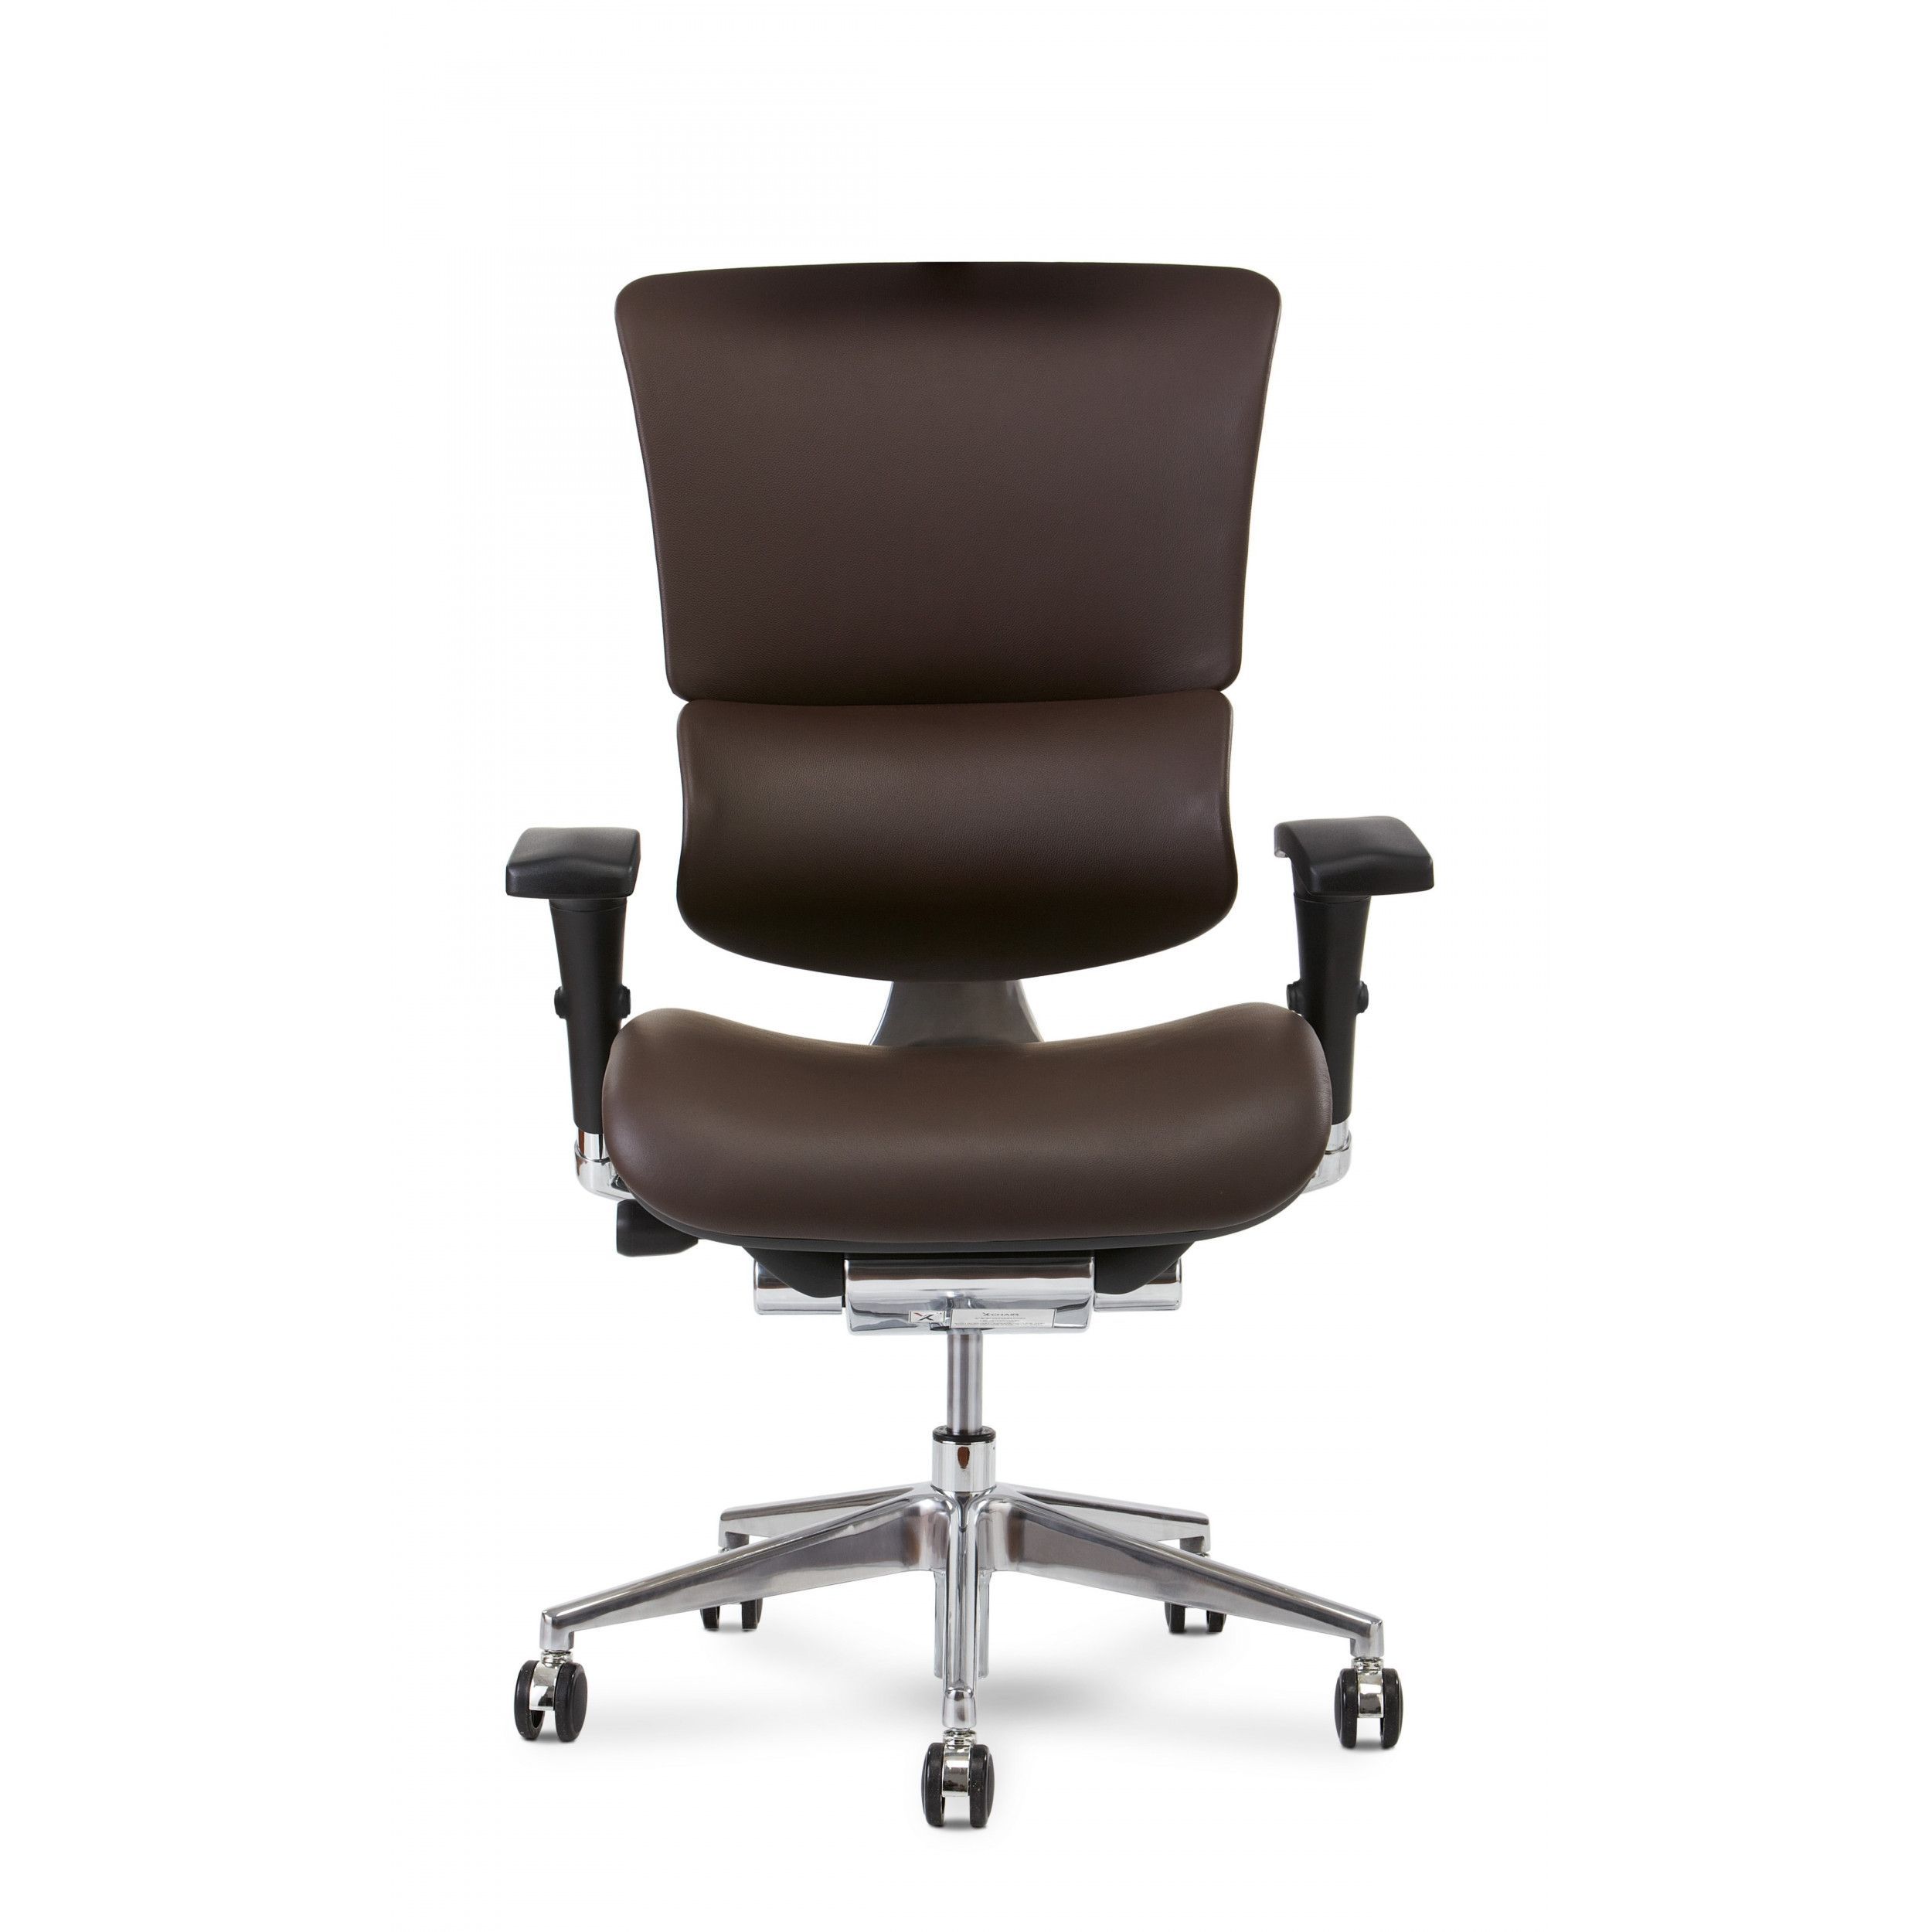 https://dallasdesk.com/media/catalog/product/cache/e28619a88e7569866466672552bcd3ad/c/h/che7020chr-x-chair-x4-leather-executive-chair-brown-00.jpg